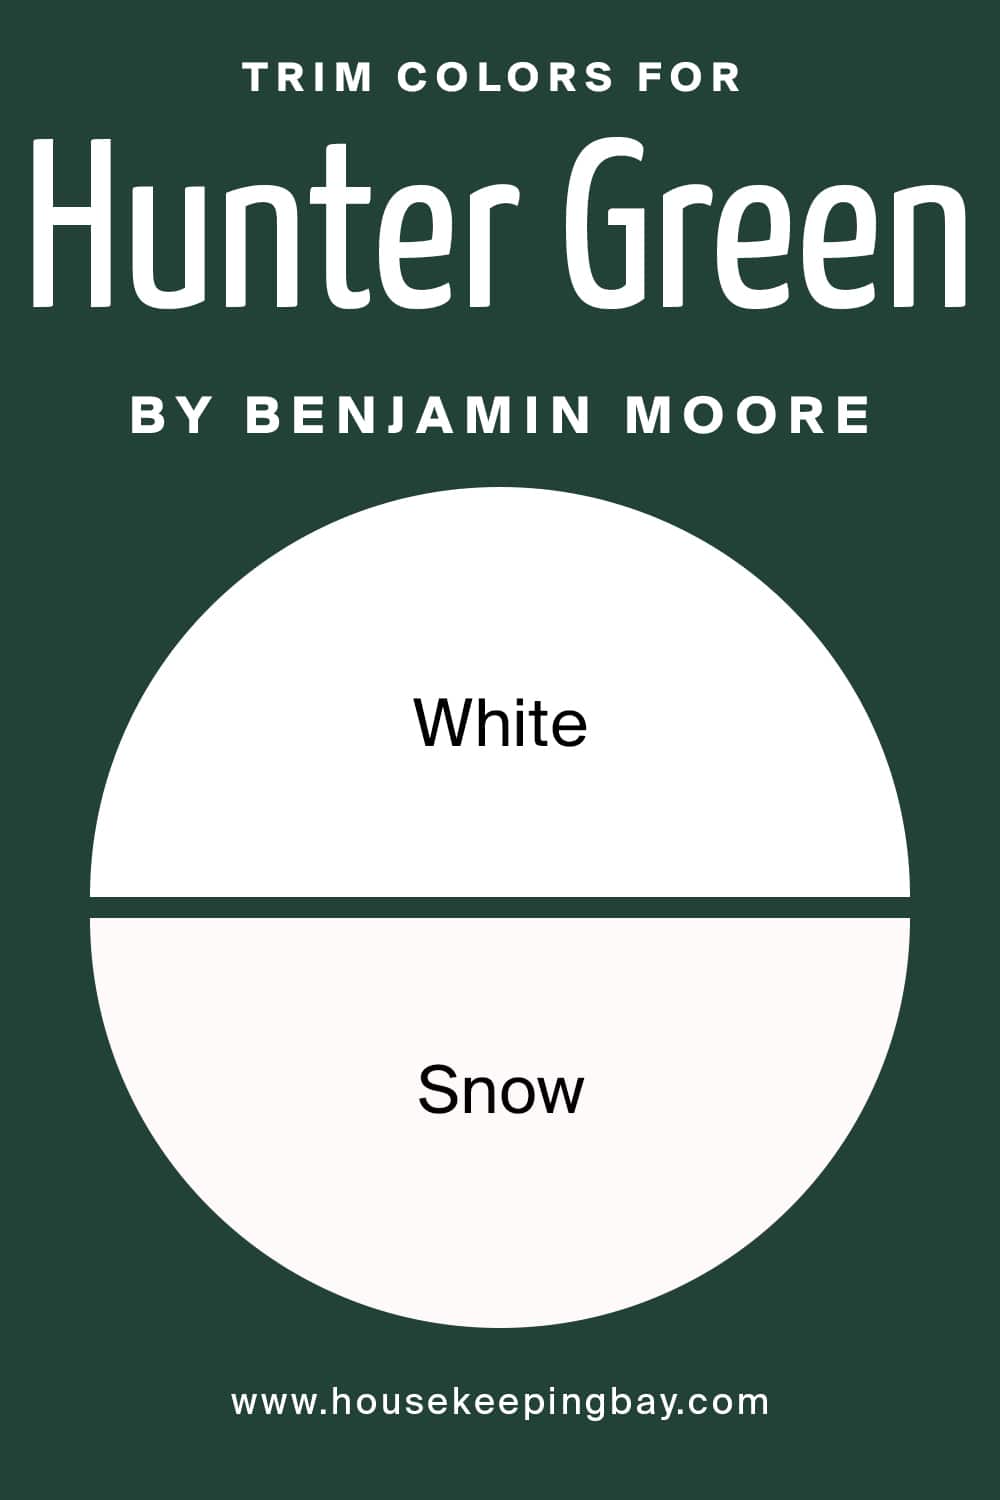 Trim Colors for Hunter Green by Benjamin Moore